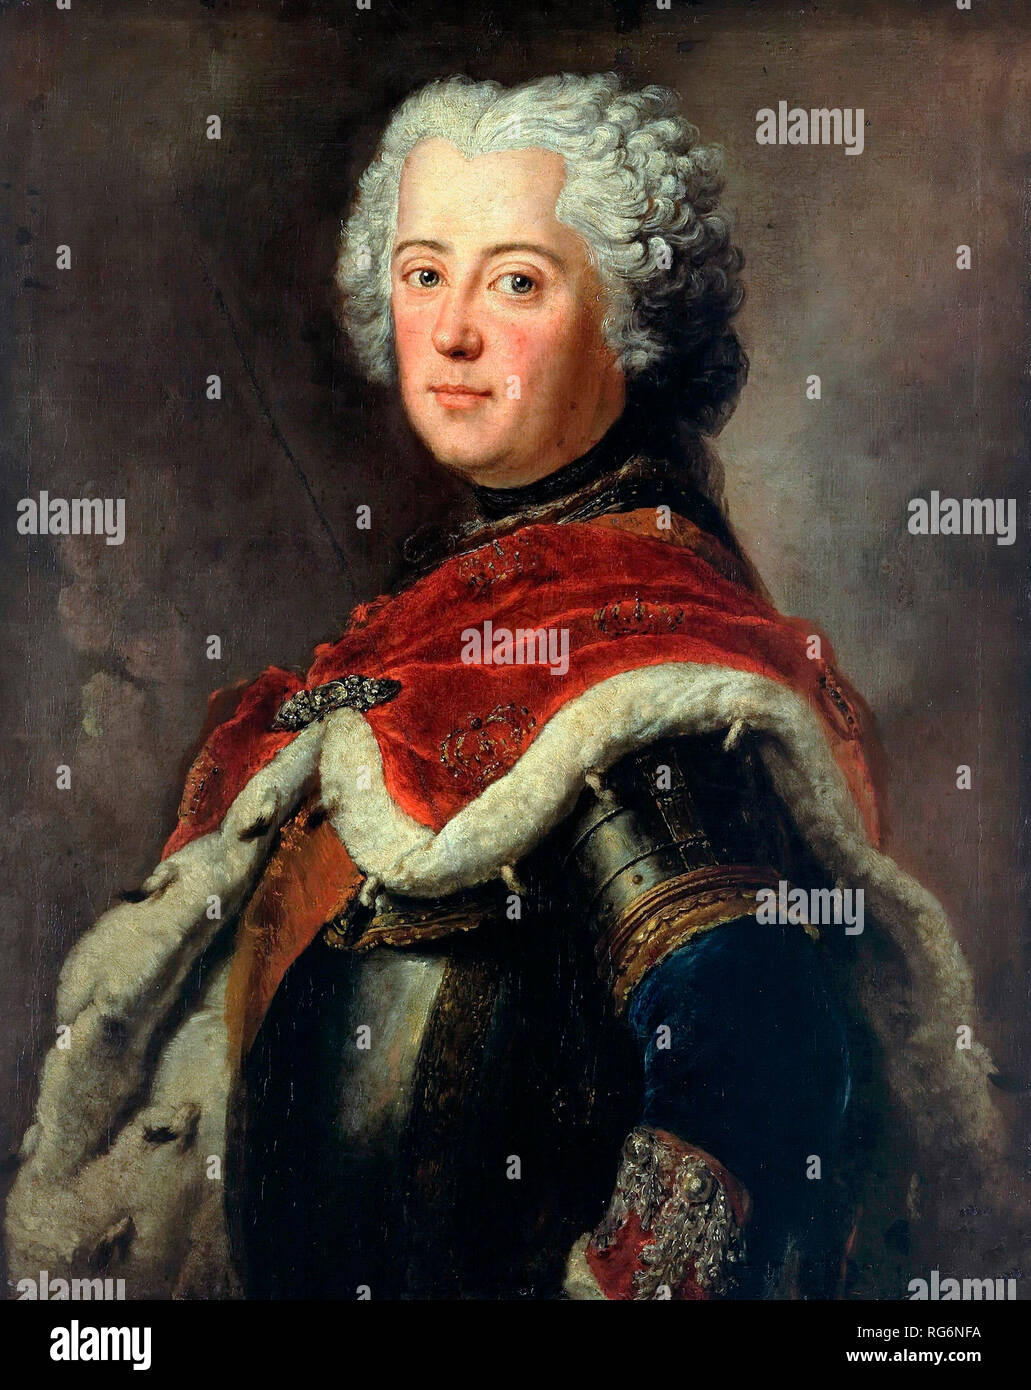 Frederick le grand comme le Prince - Antoine Pesne, vers 1740 Banque D'Images